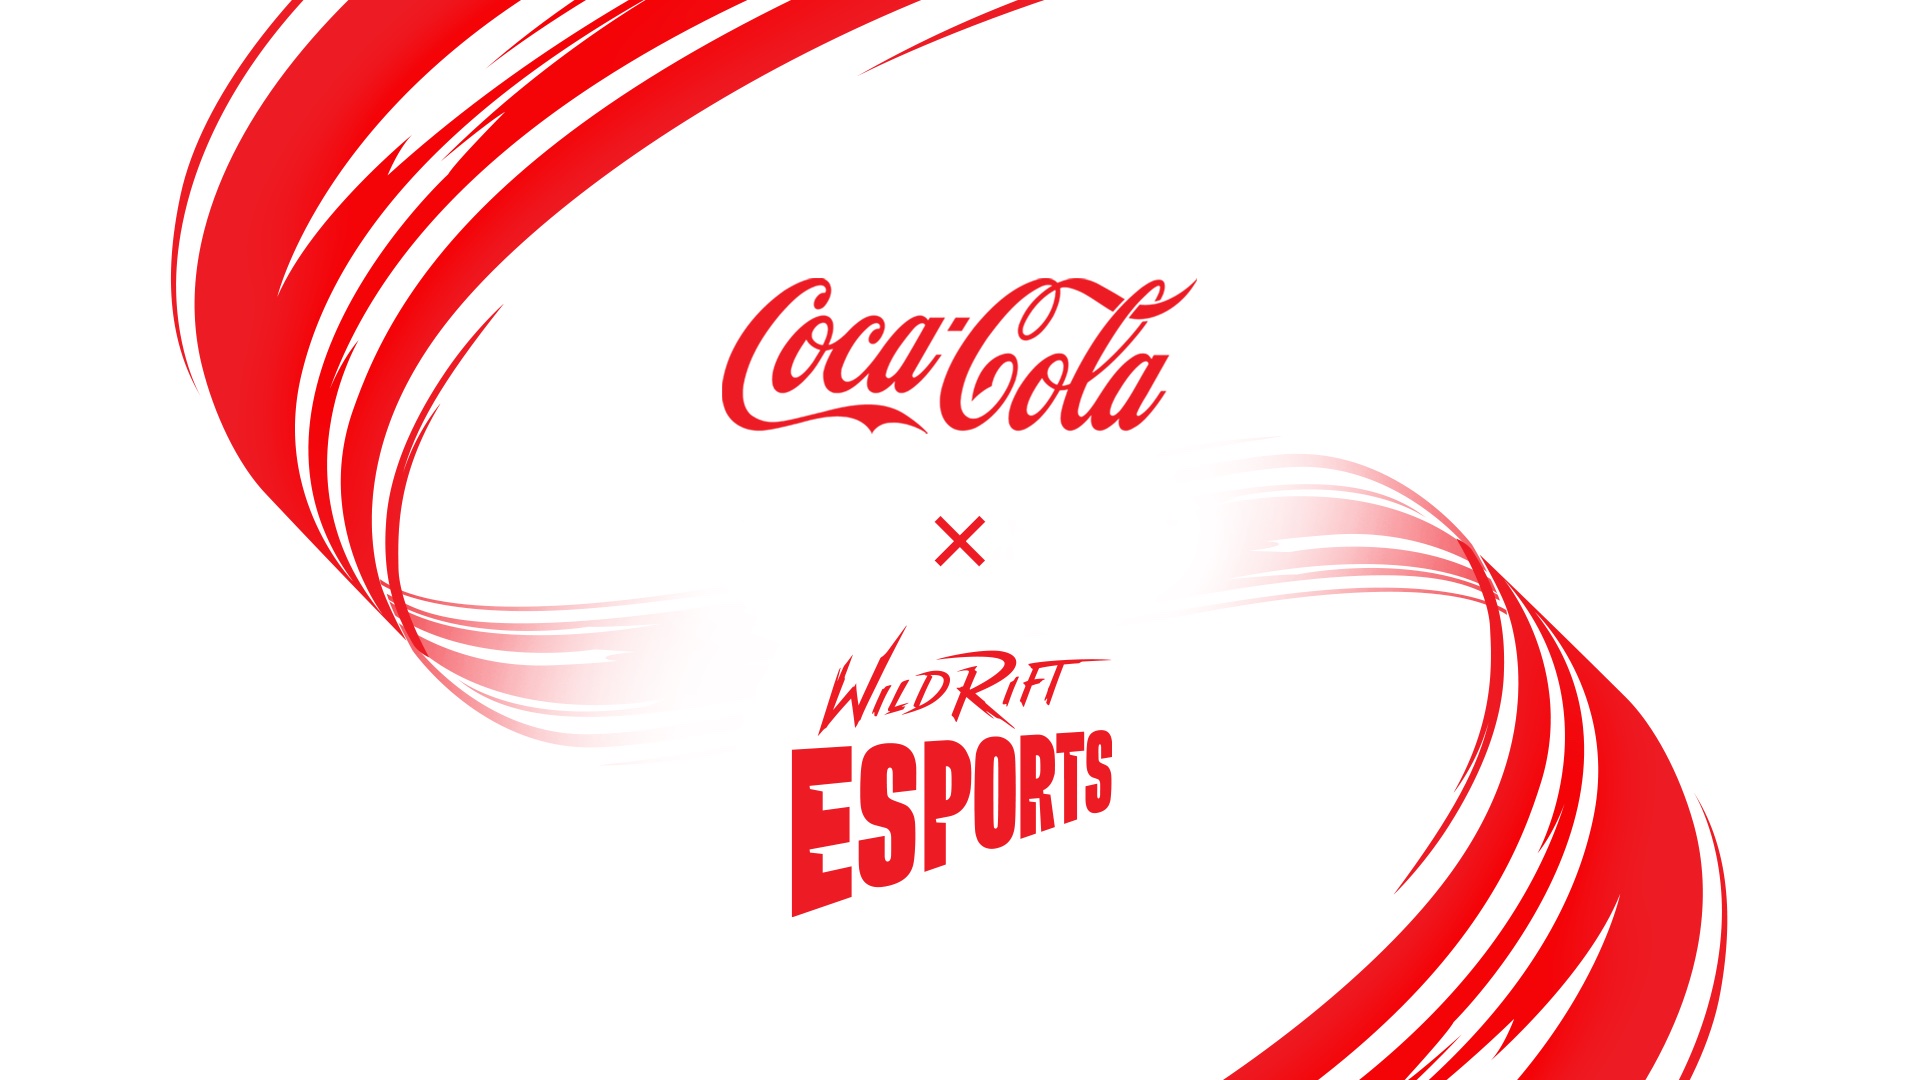 coca-cola becomes global partner of wild rift esports